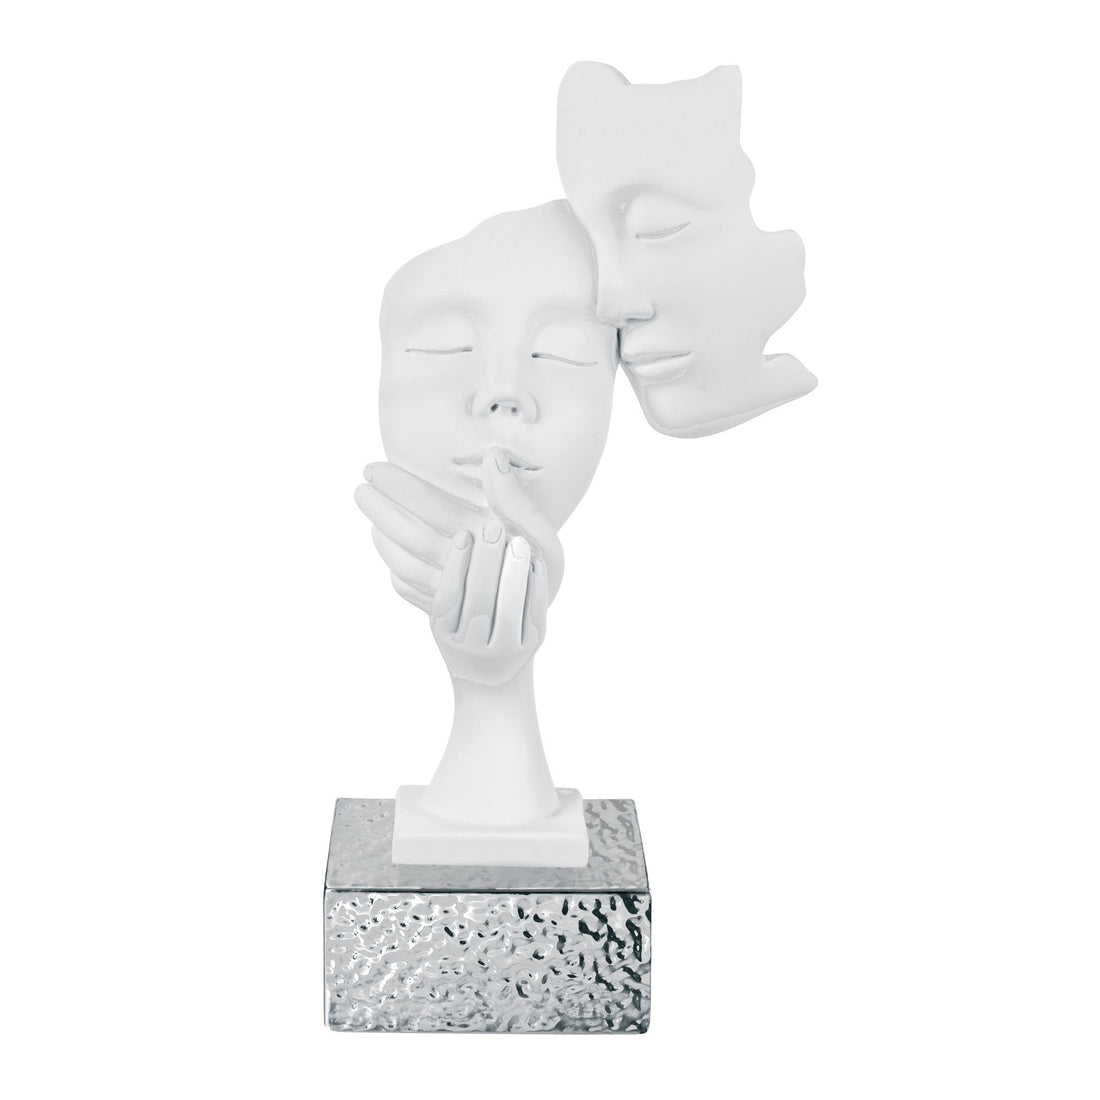 BONGELLI PREZIOSI Figura Statua Moderna Coppia Face 28cm Bianco Base Argento Marmorino